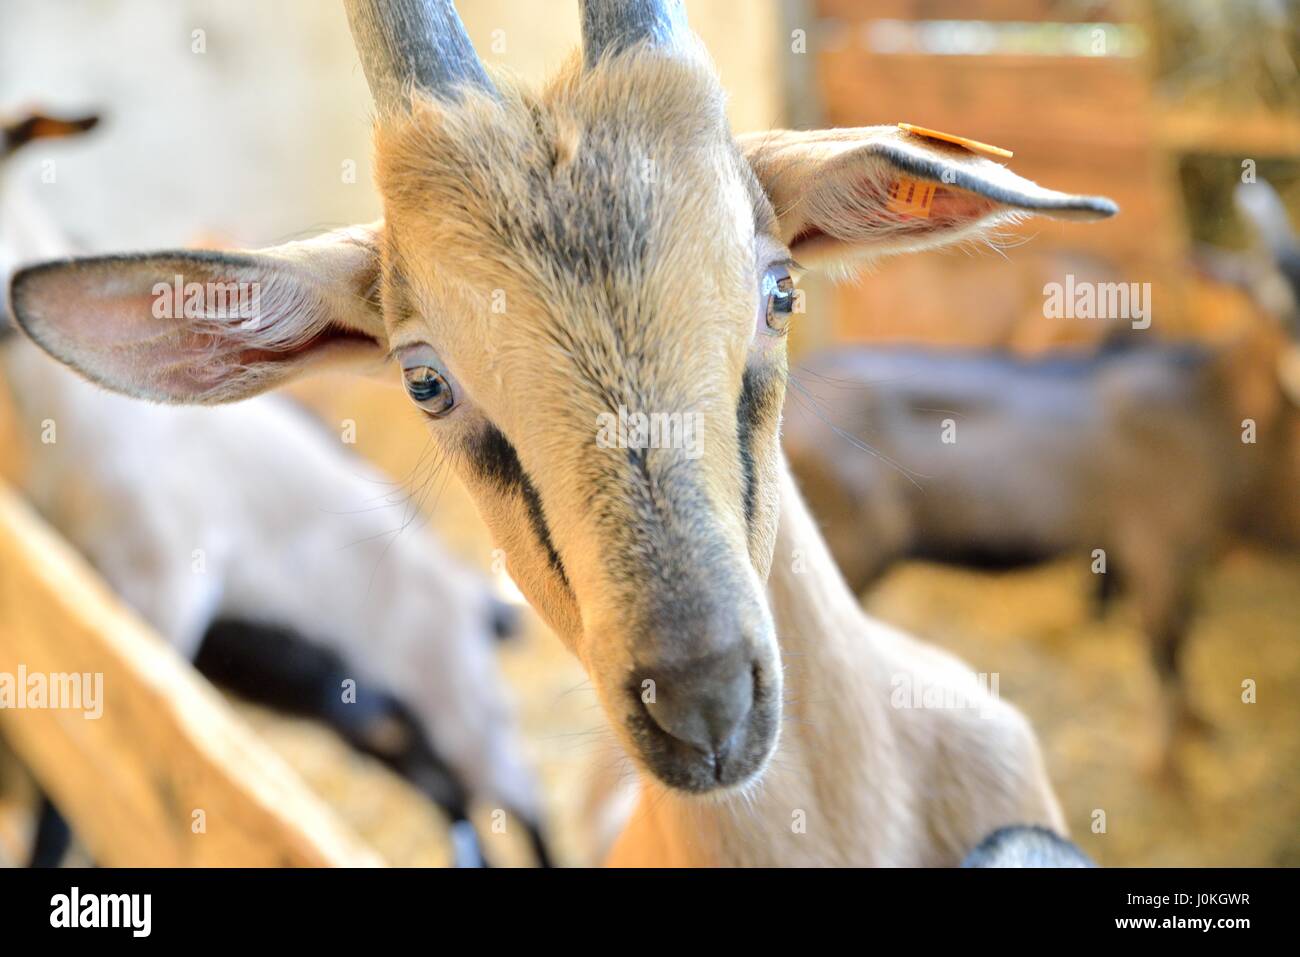 enjoyable goat in pose Stock Photo